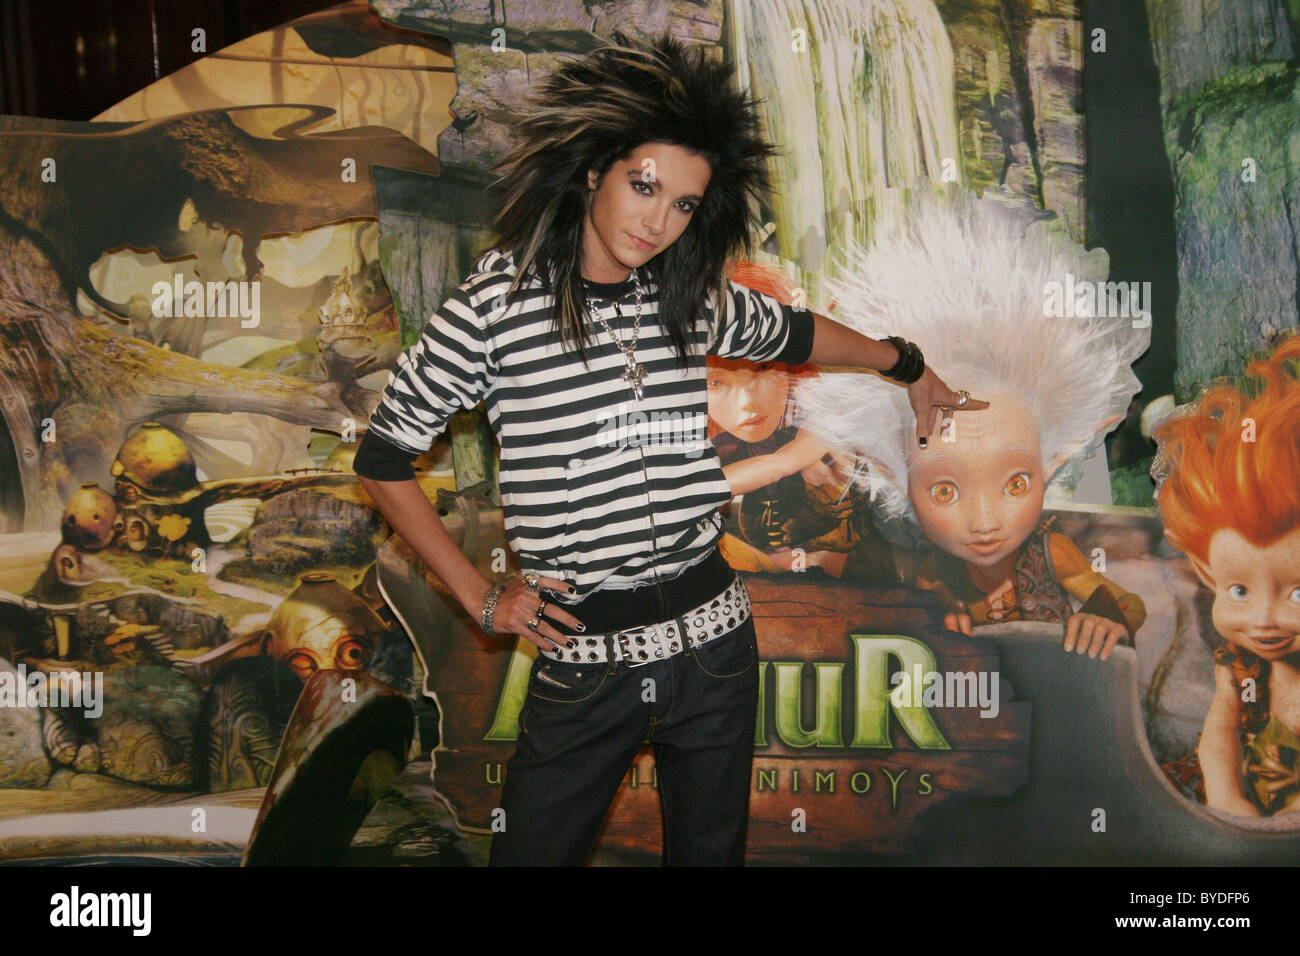 Tokio Hotel singer Bill Kaulitz German premiere of 'Arthur und die Minimoys' ('Arthur and the Invisibles') at the CineStar Stock Photo